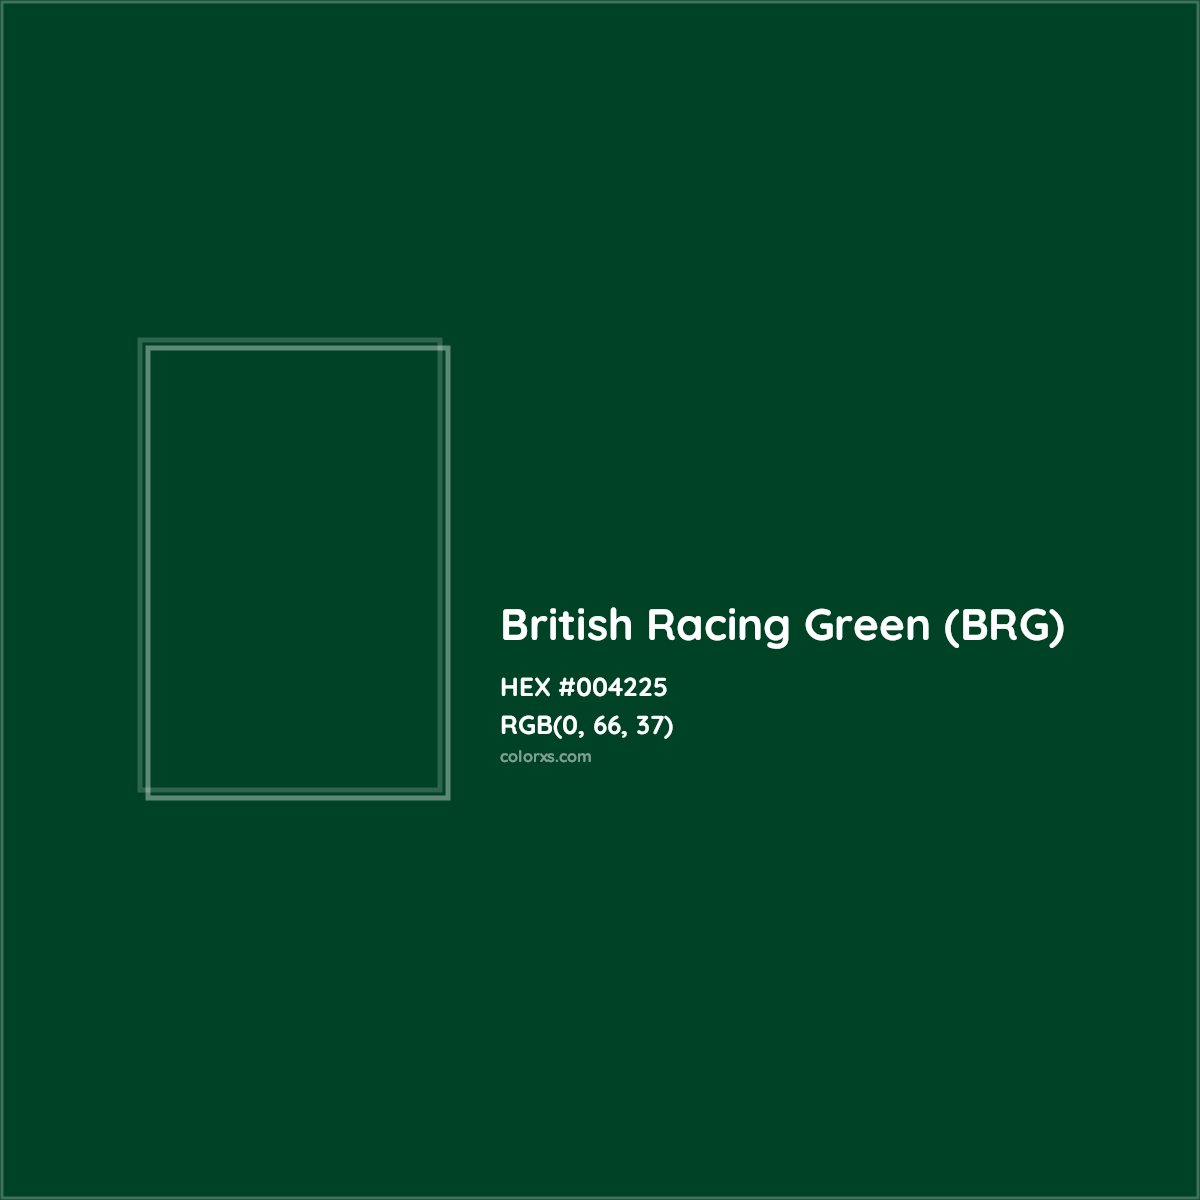 HEX #004225 British Racing Green (BRG) Color - Color Code